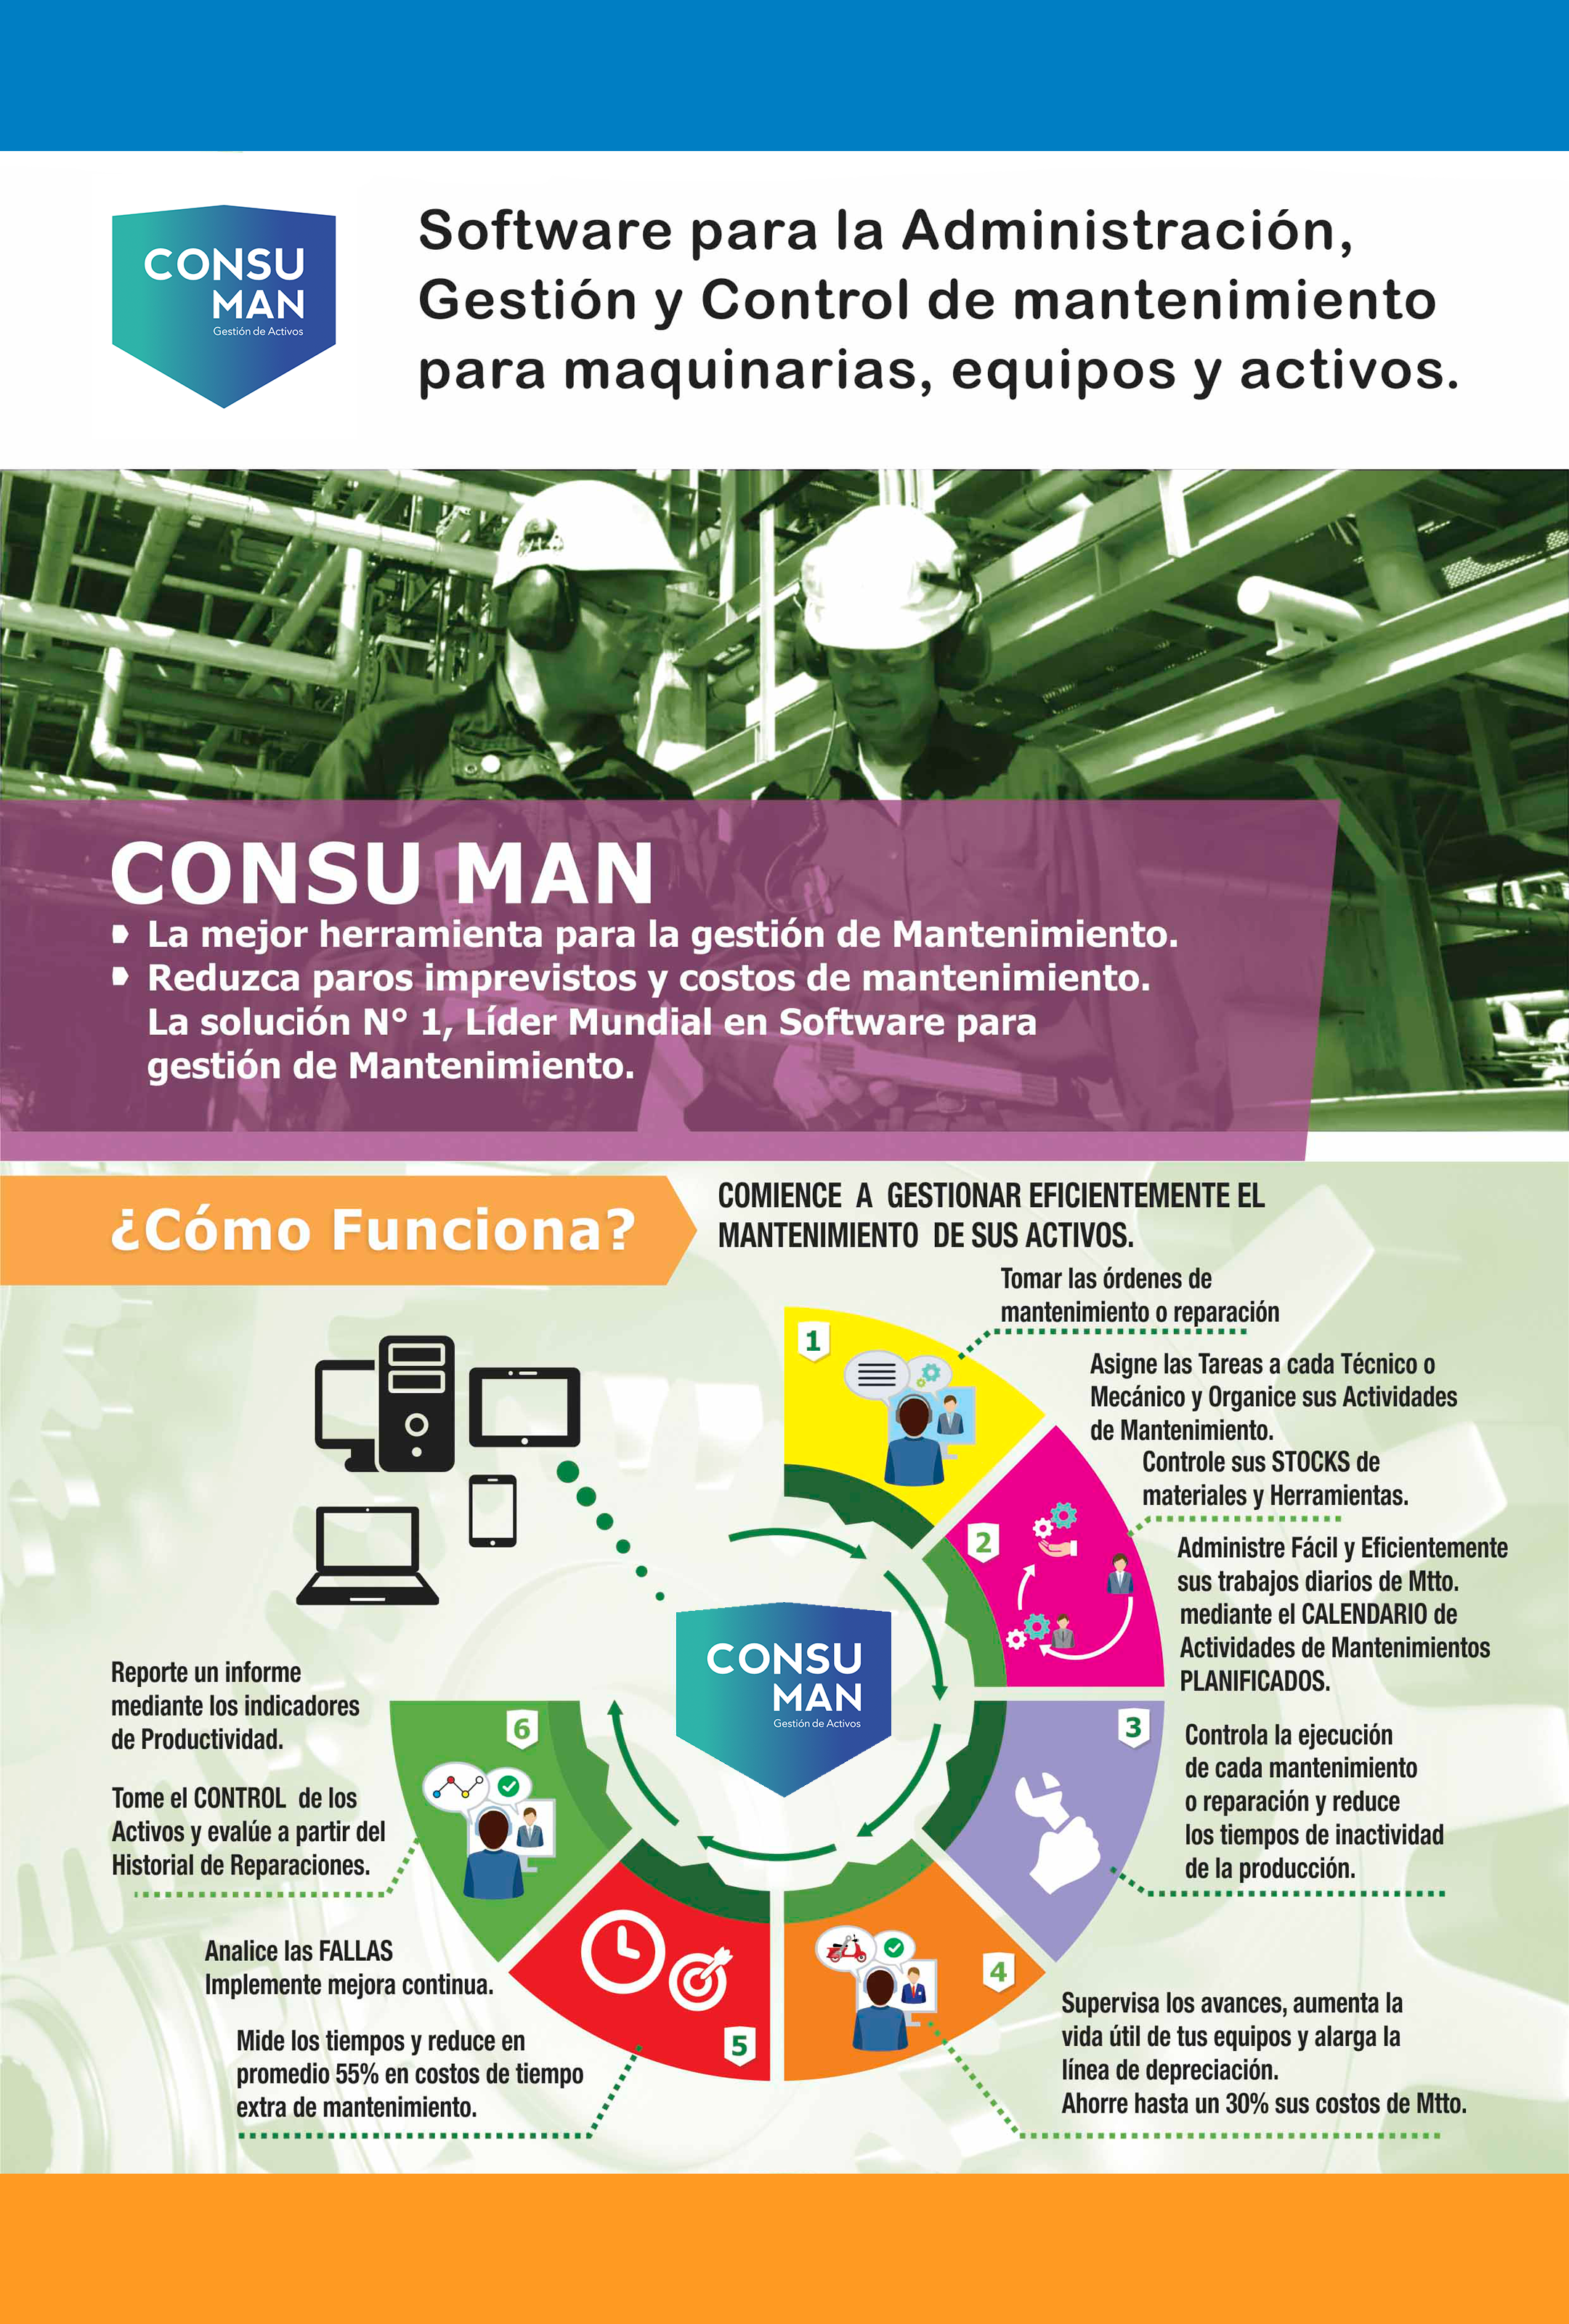 Software CONSU MAN